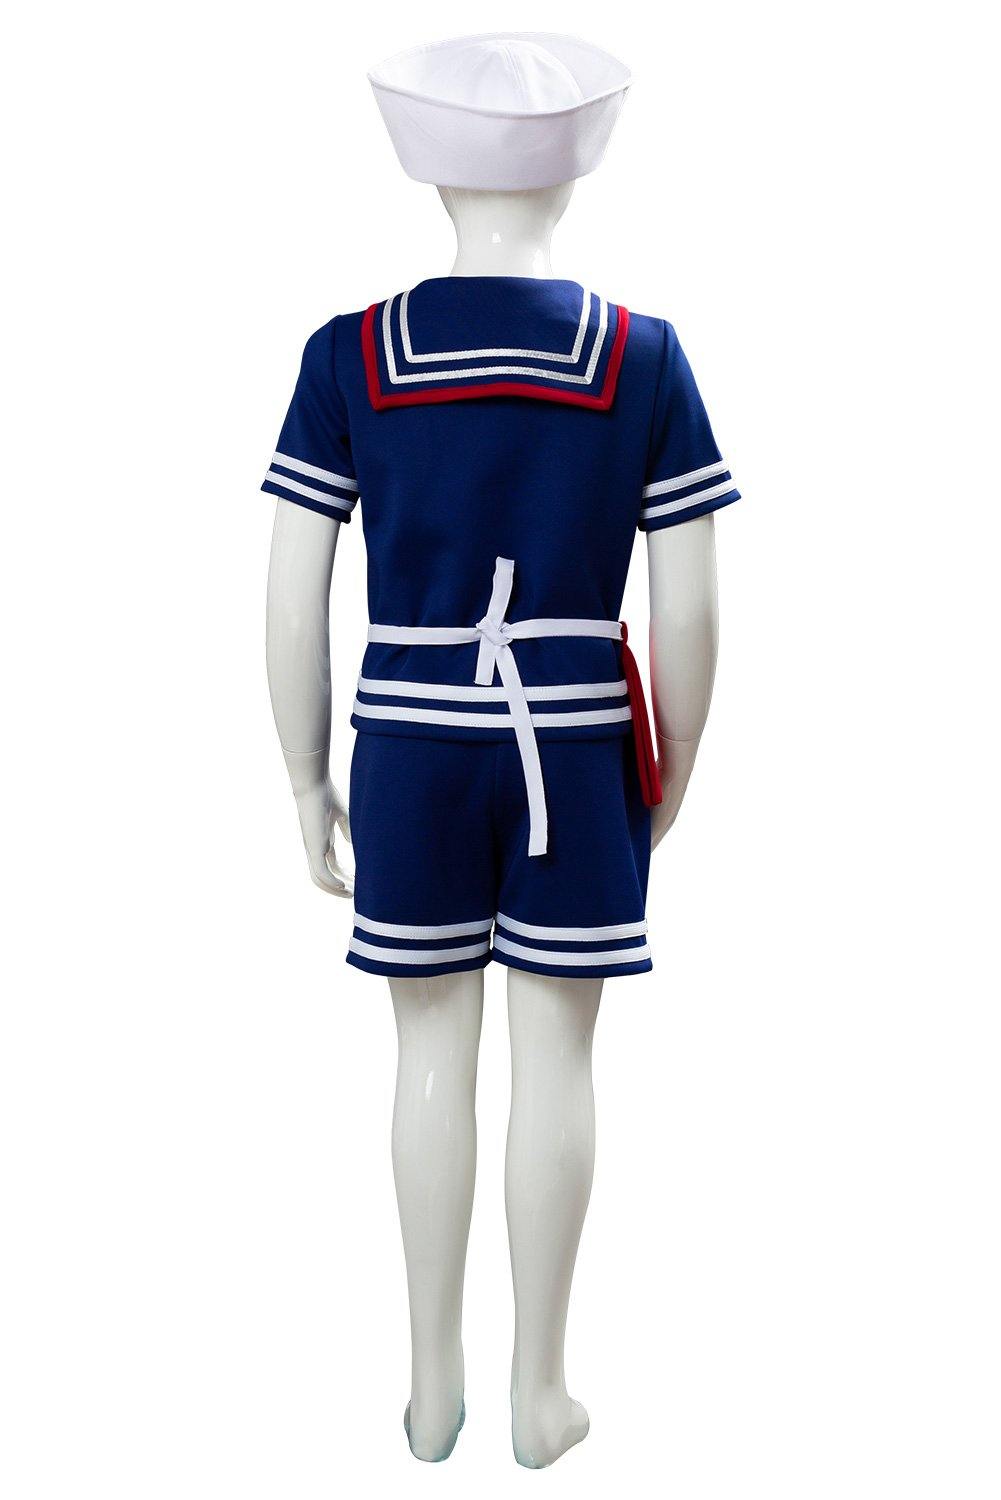 Steve Harrington Stranger Things 3 Scoops Ahoy Uniform Cosplay Kostüm für Kinder - cosplaycartde